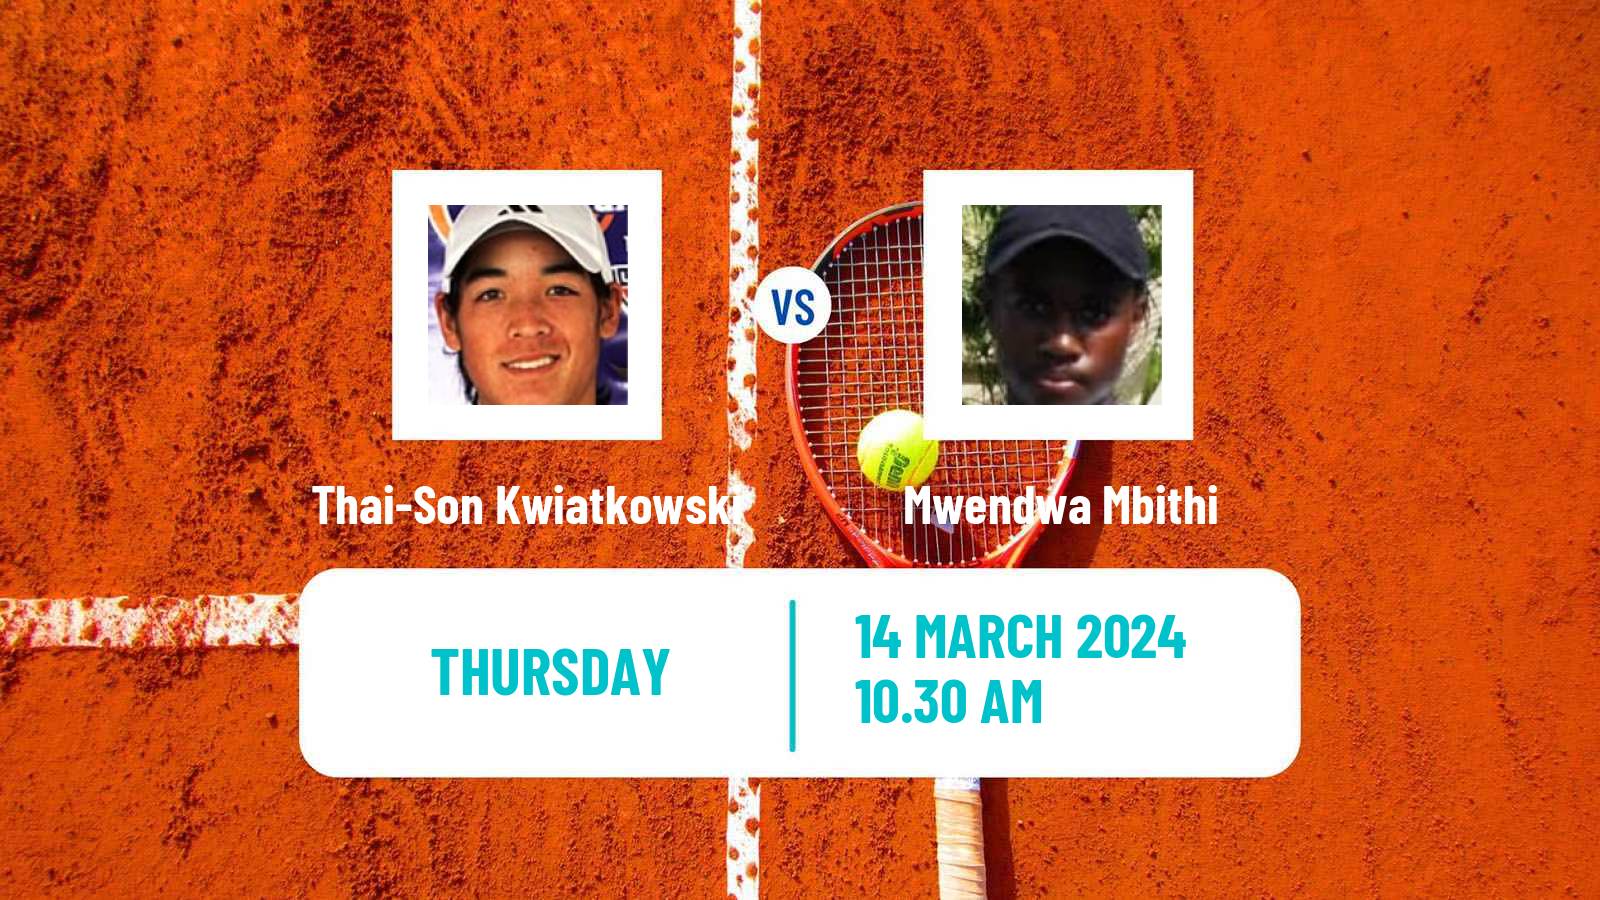 Tennis ITF M25 Santo Domingo 2 Men Thai-Son Kwiatkowski - Mwendwa Mbithi